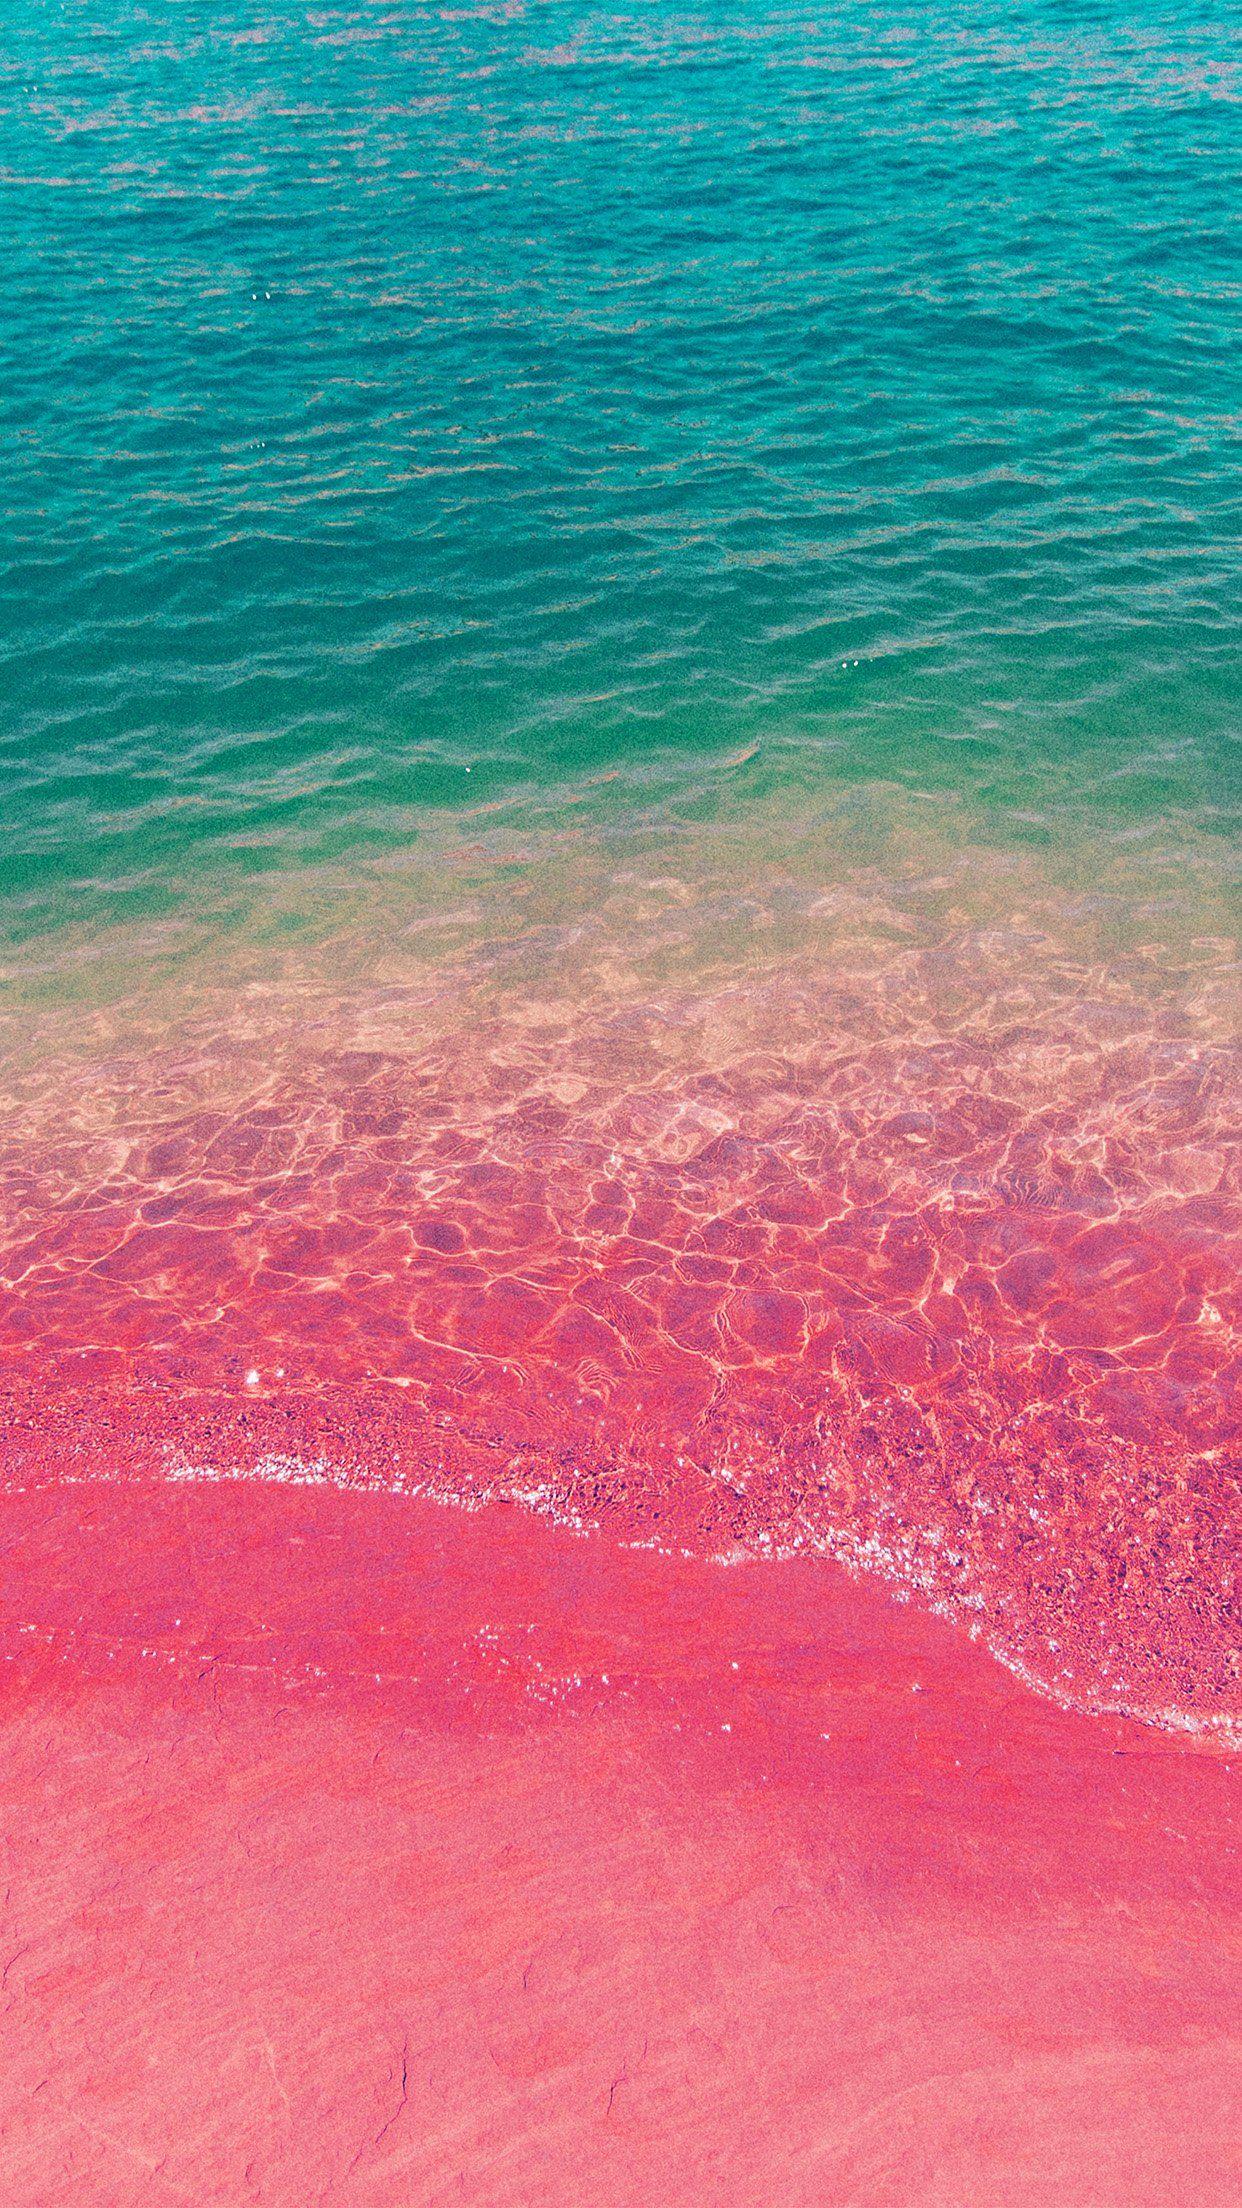 Заставка на айфон 7. Айфон IOS 11. Розовое море. Розовое лето. Море с розовым песком.